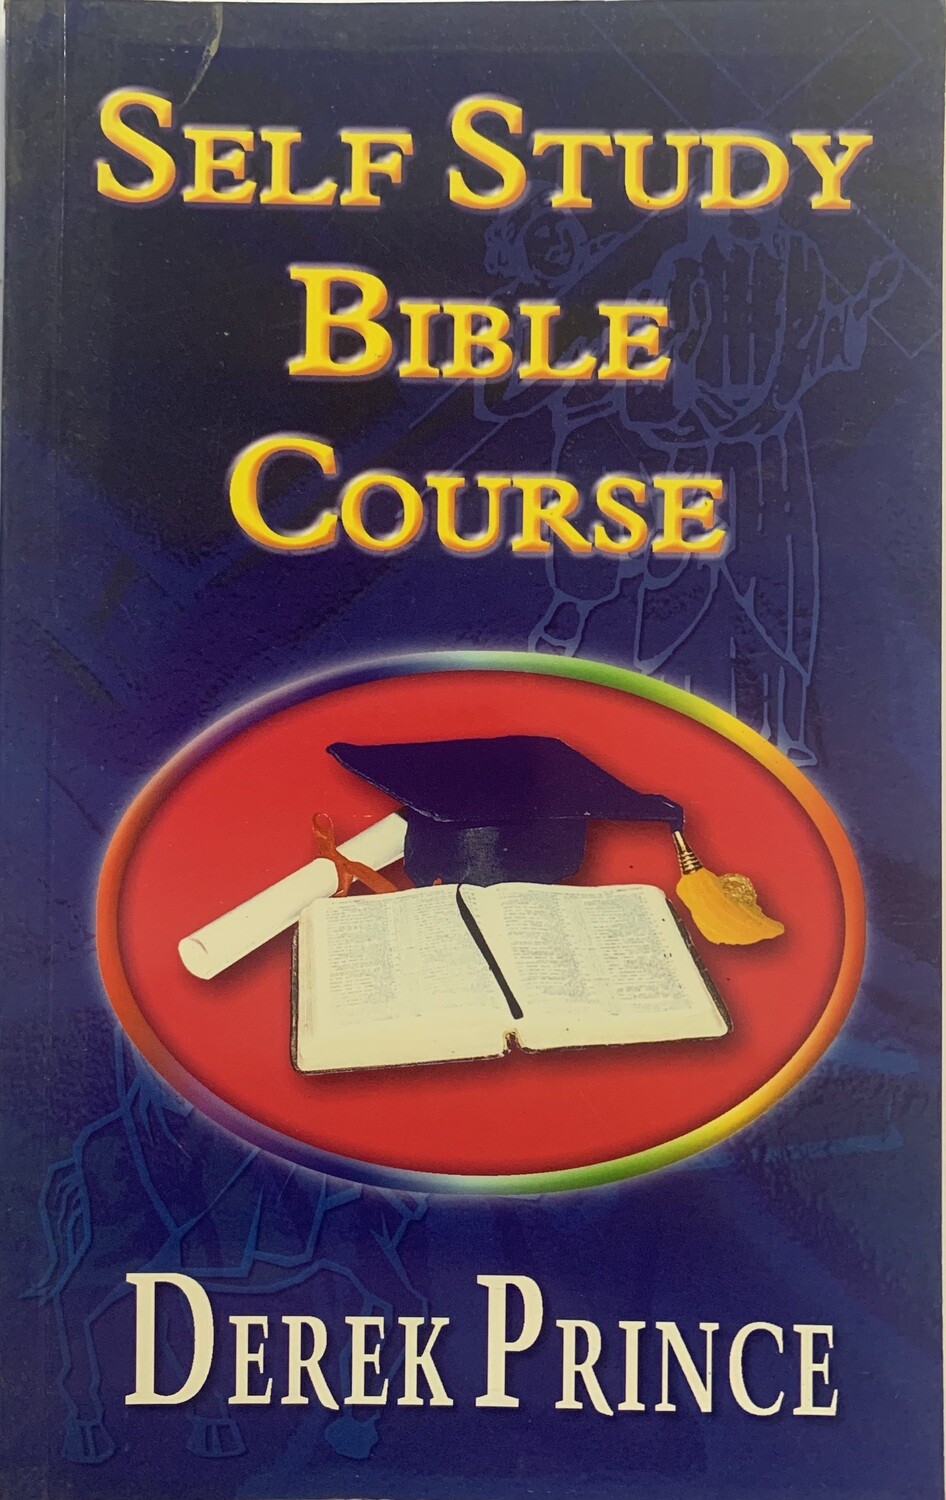 Derek Prince - Self Study Bible Course